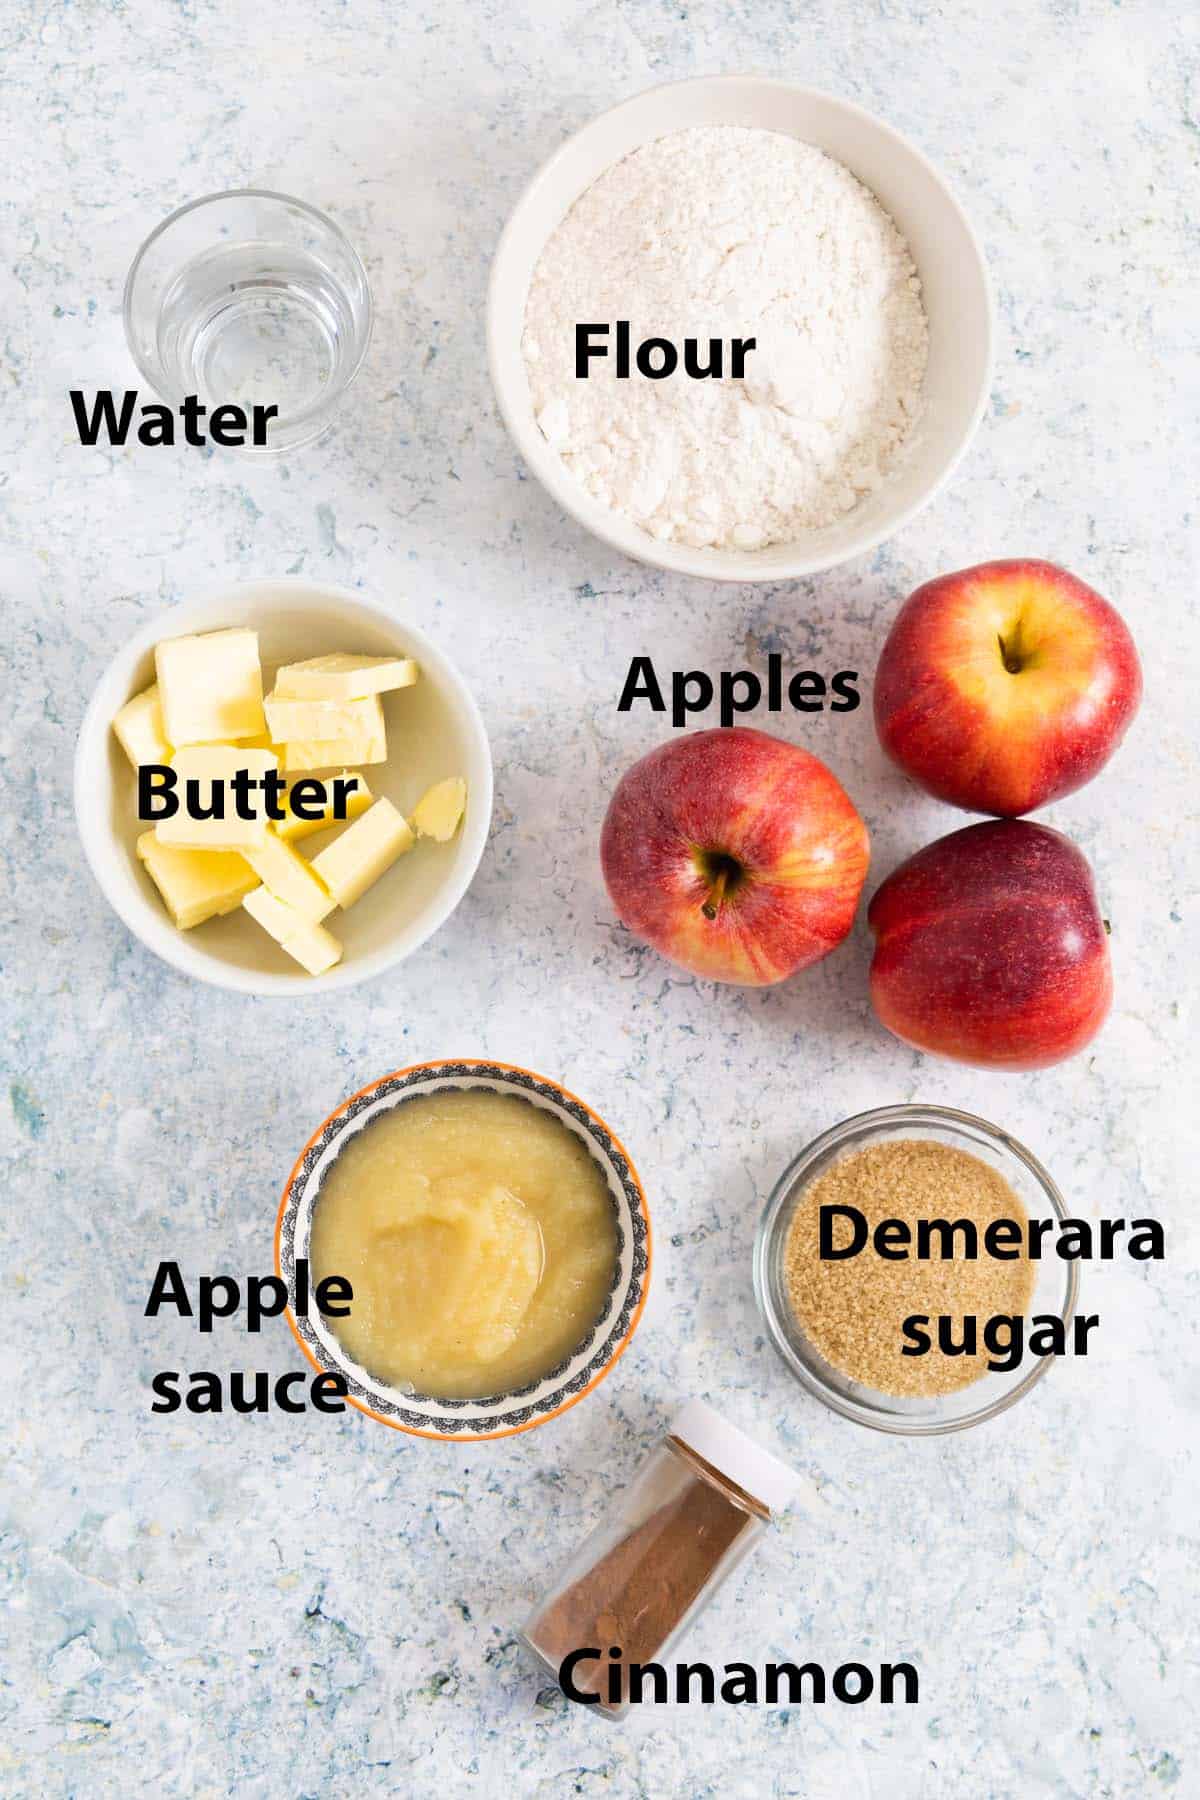 labelled ingredients: flour, water, butter, apple sauce, apples, demerara sugar.